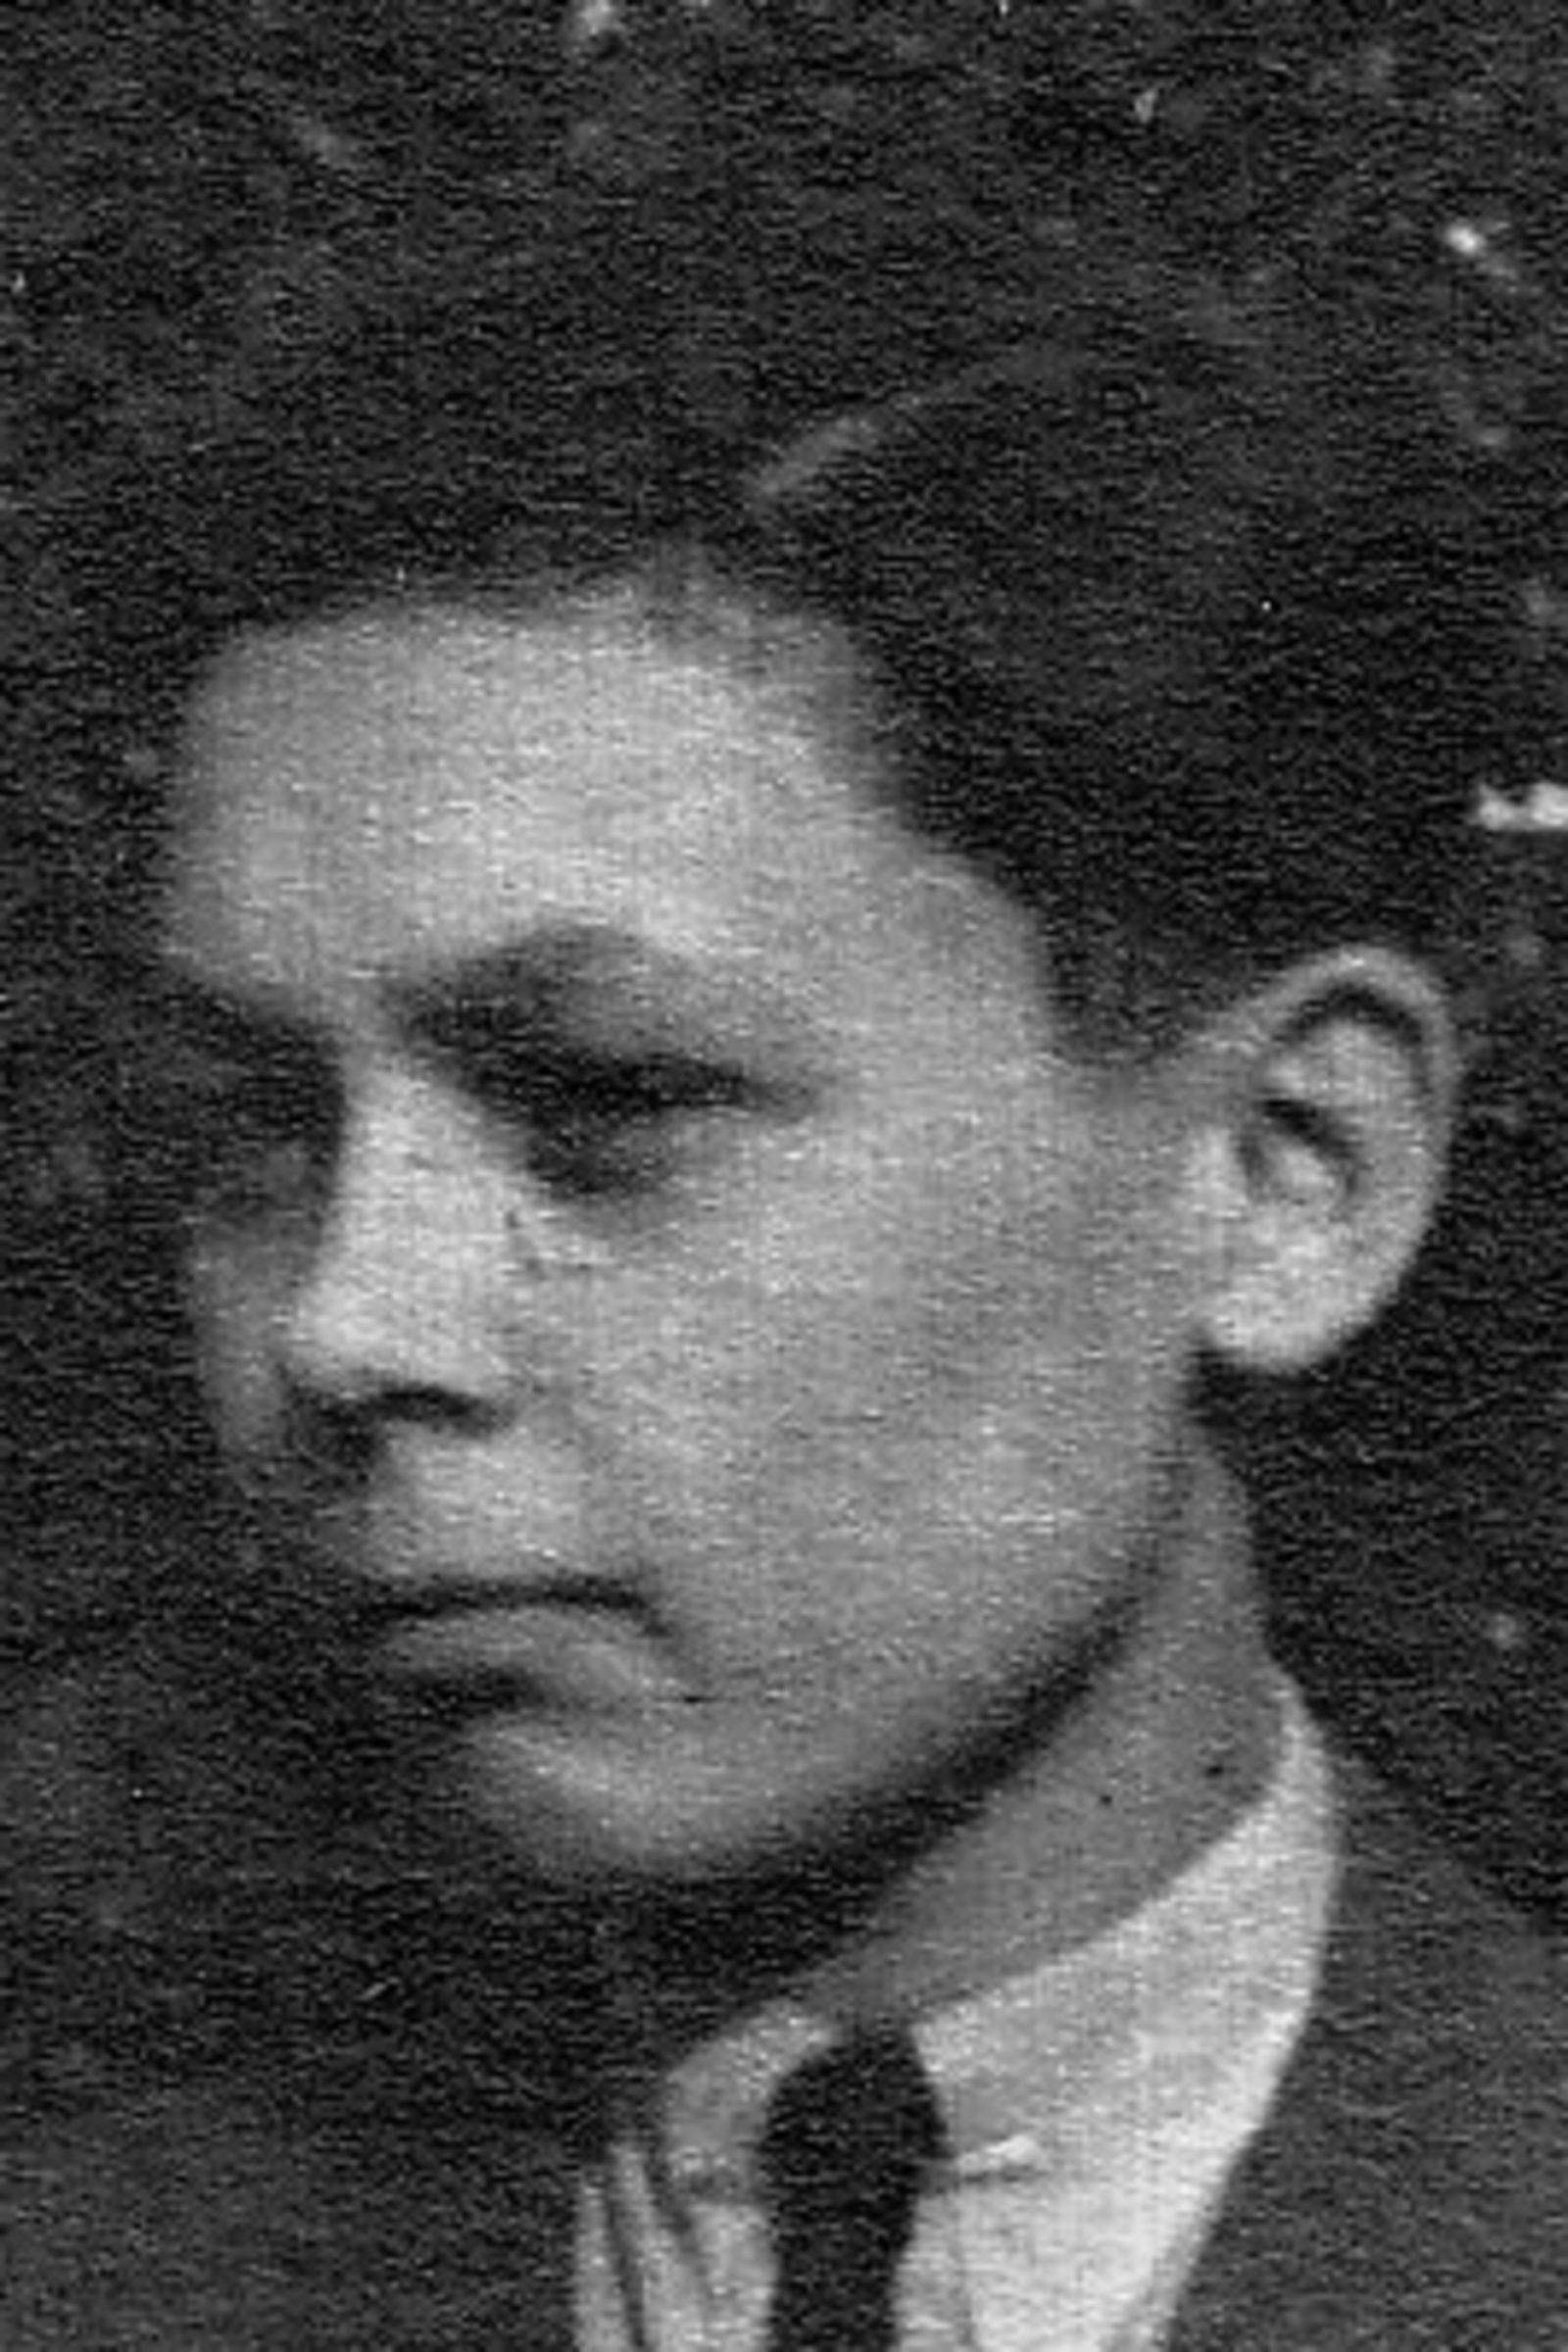 Jaroslav Ermis, září 1942